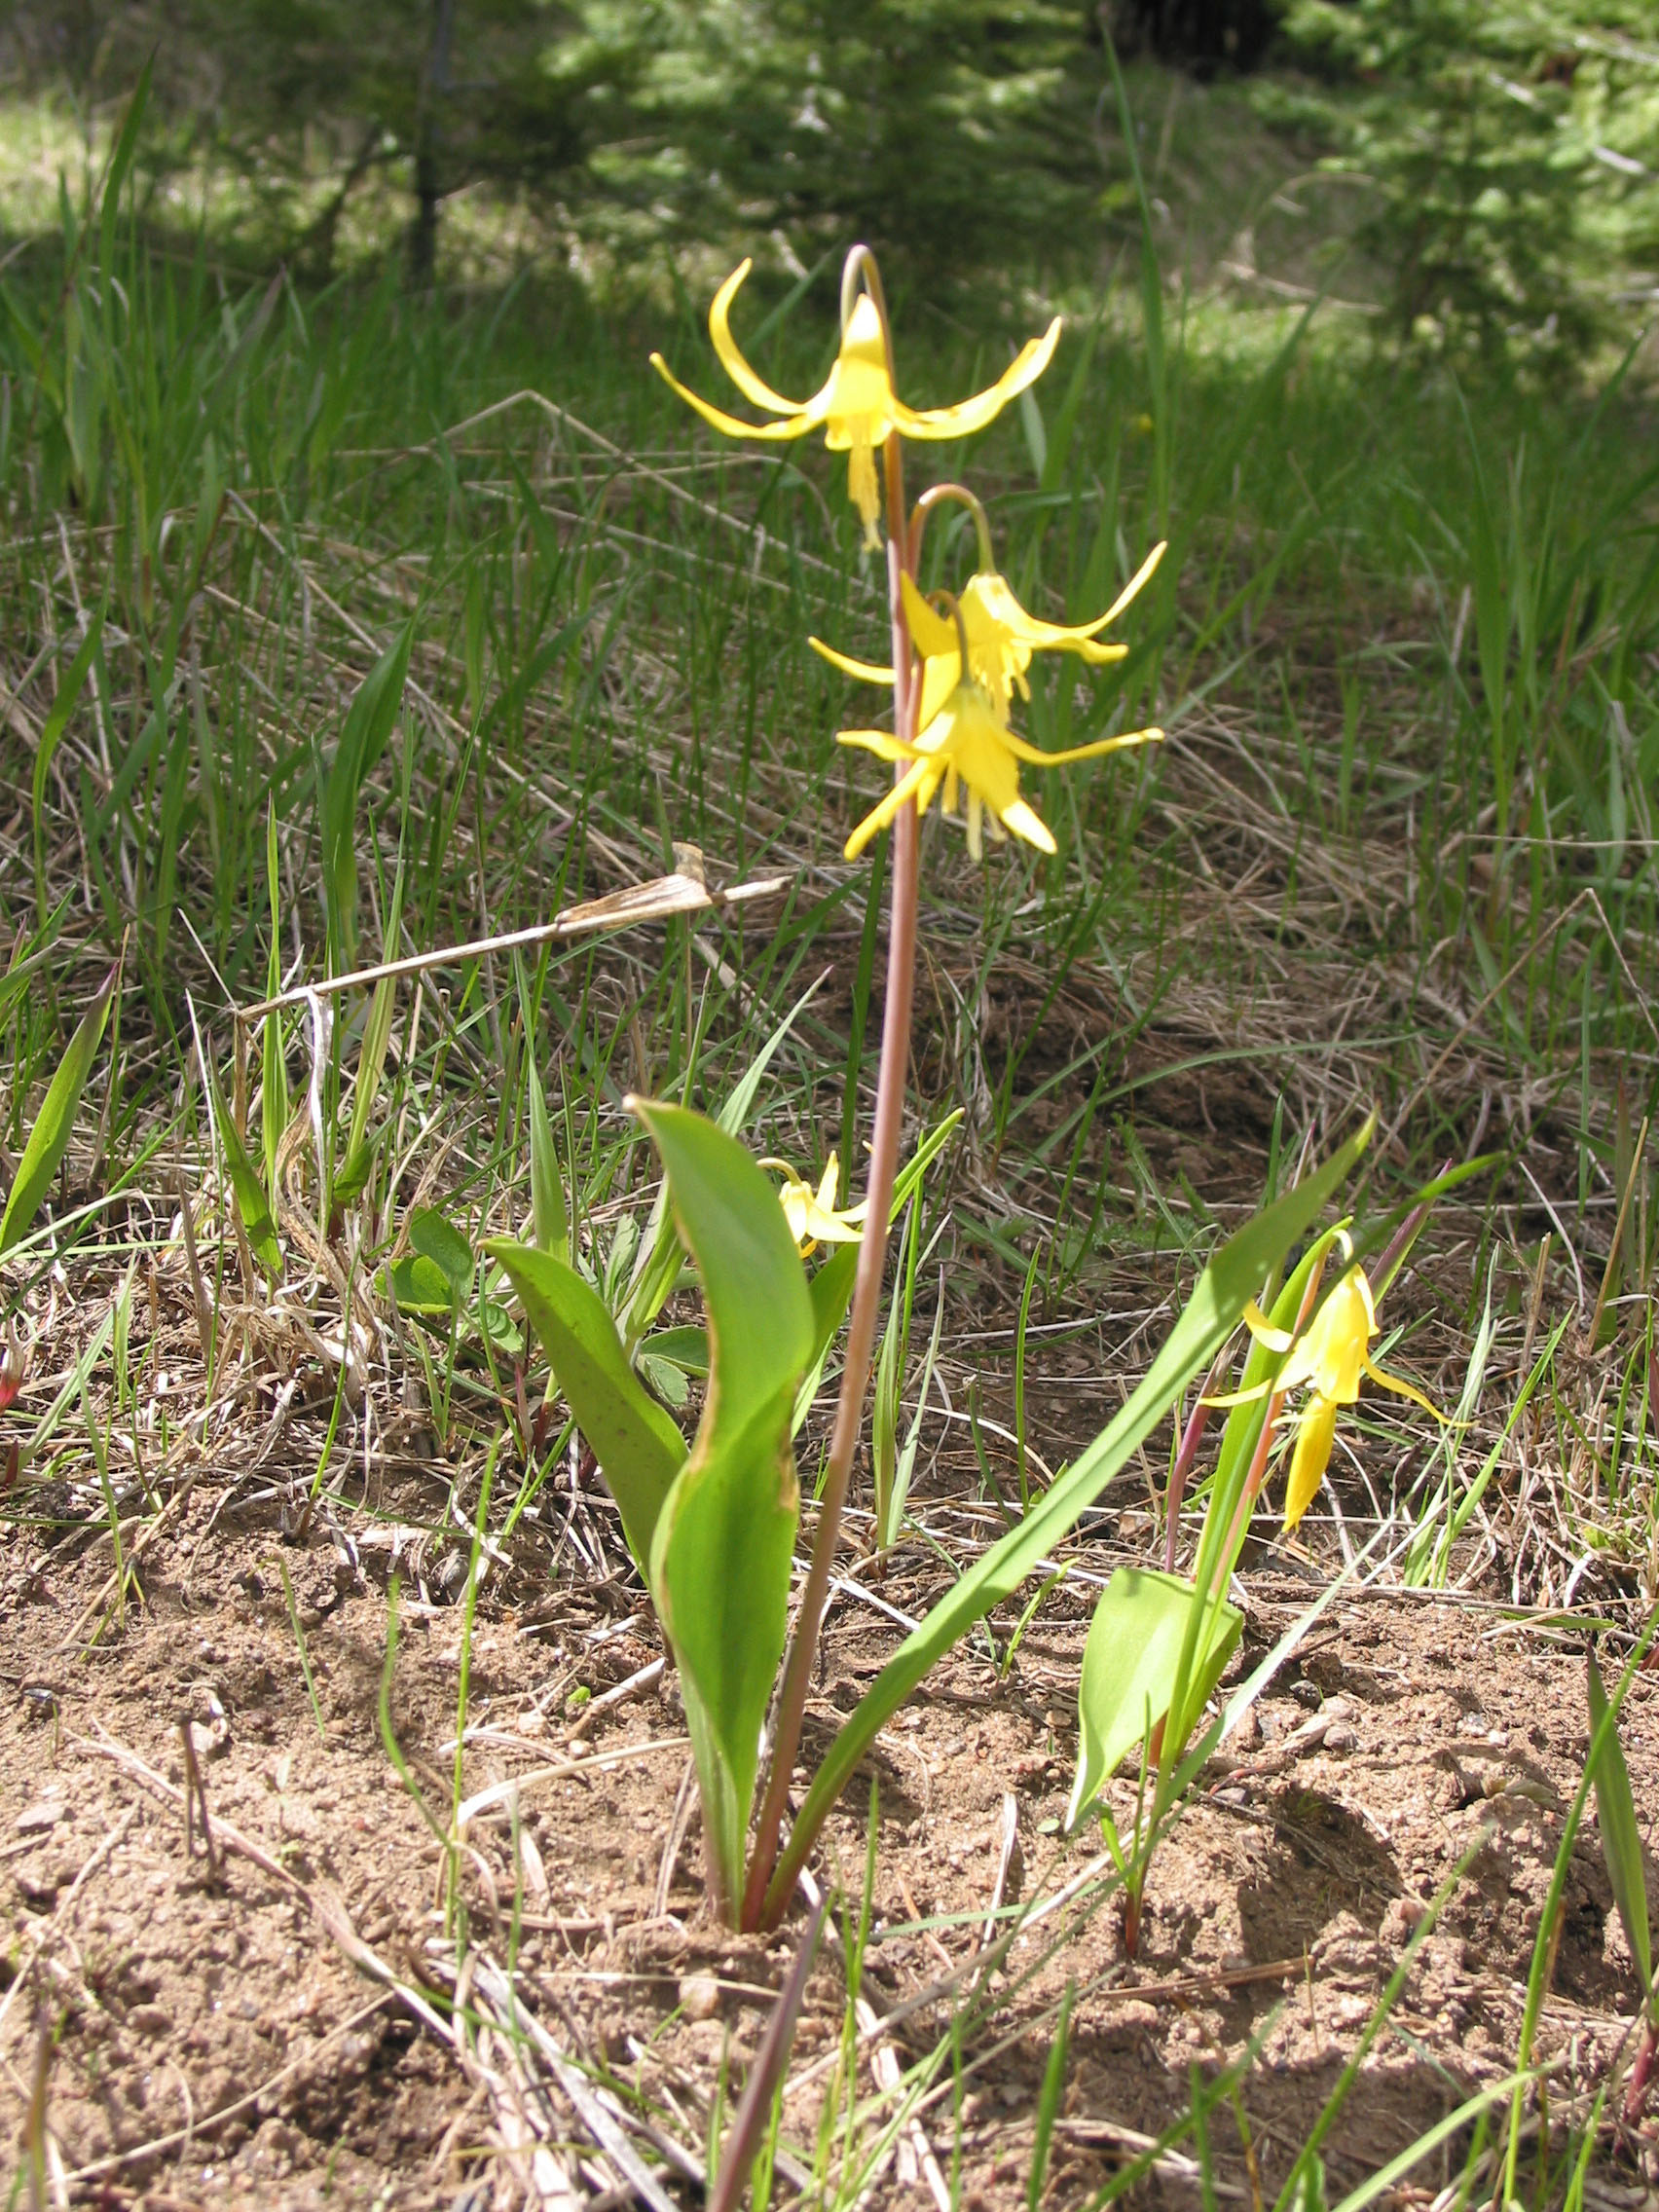 Glacier Lily (Erythronium grandiflorum)

